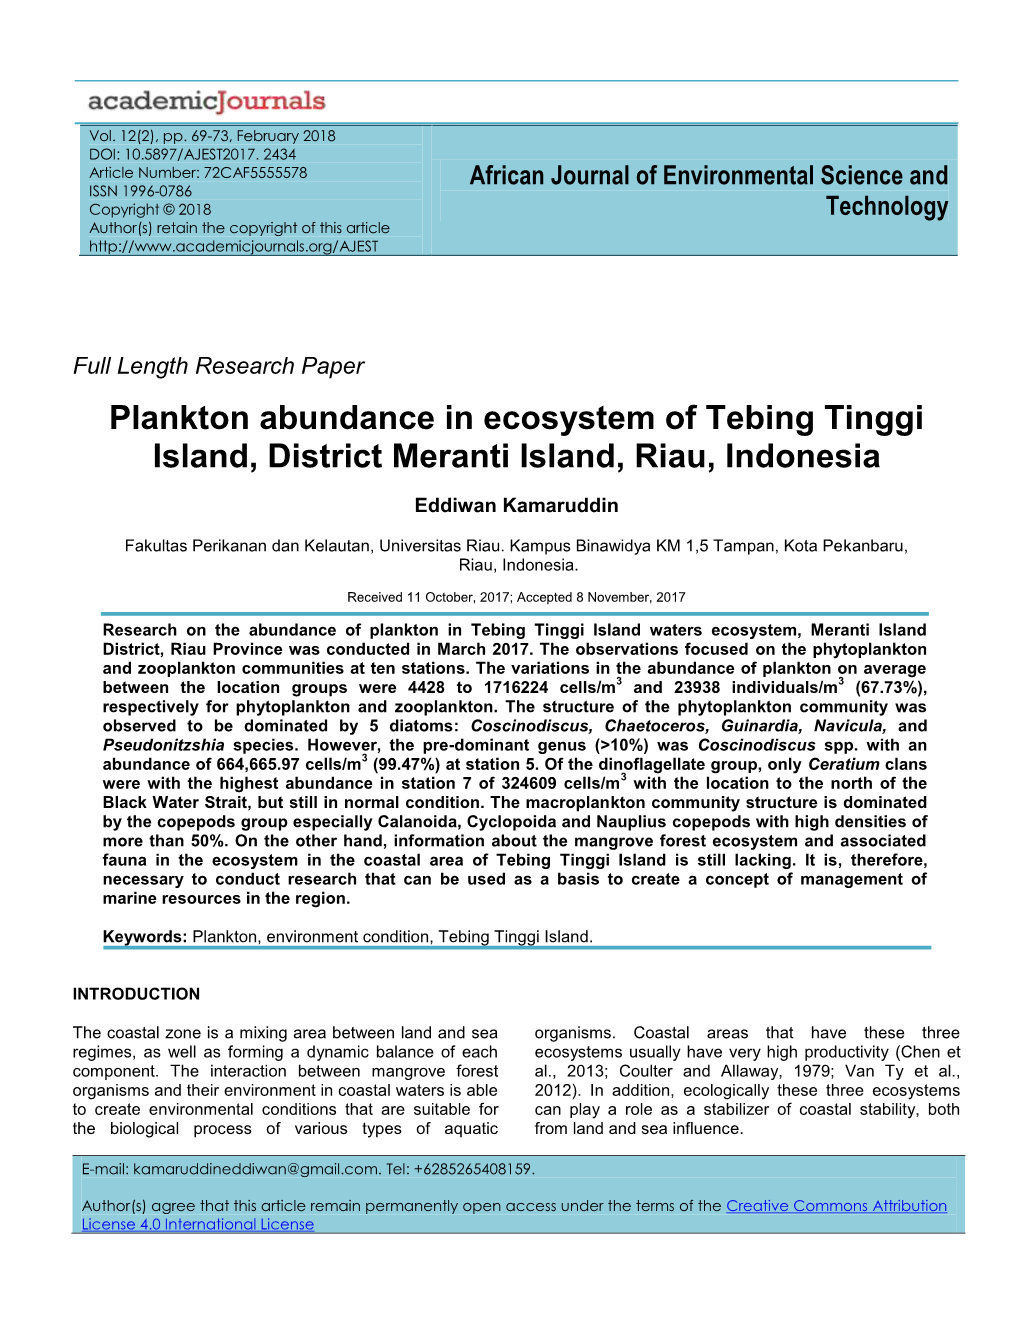 Plankton Abundance in Ecosystem of Tebing Tinggi Island, District Meranti Island, Riau, Indonesia